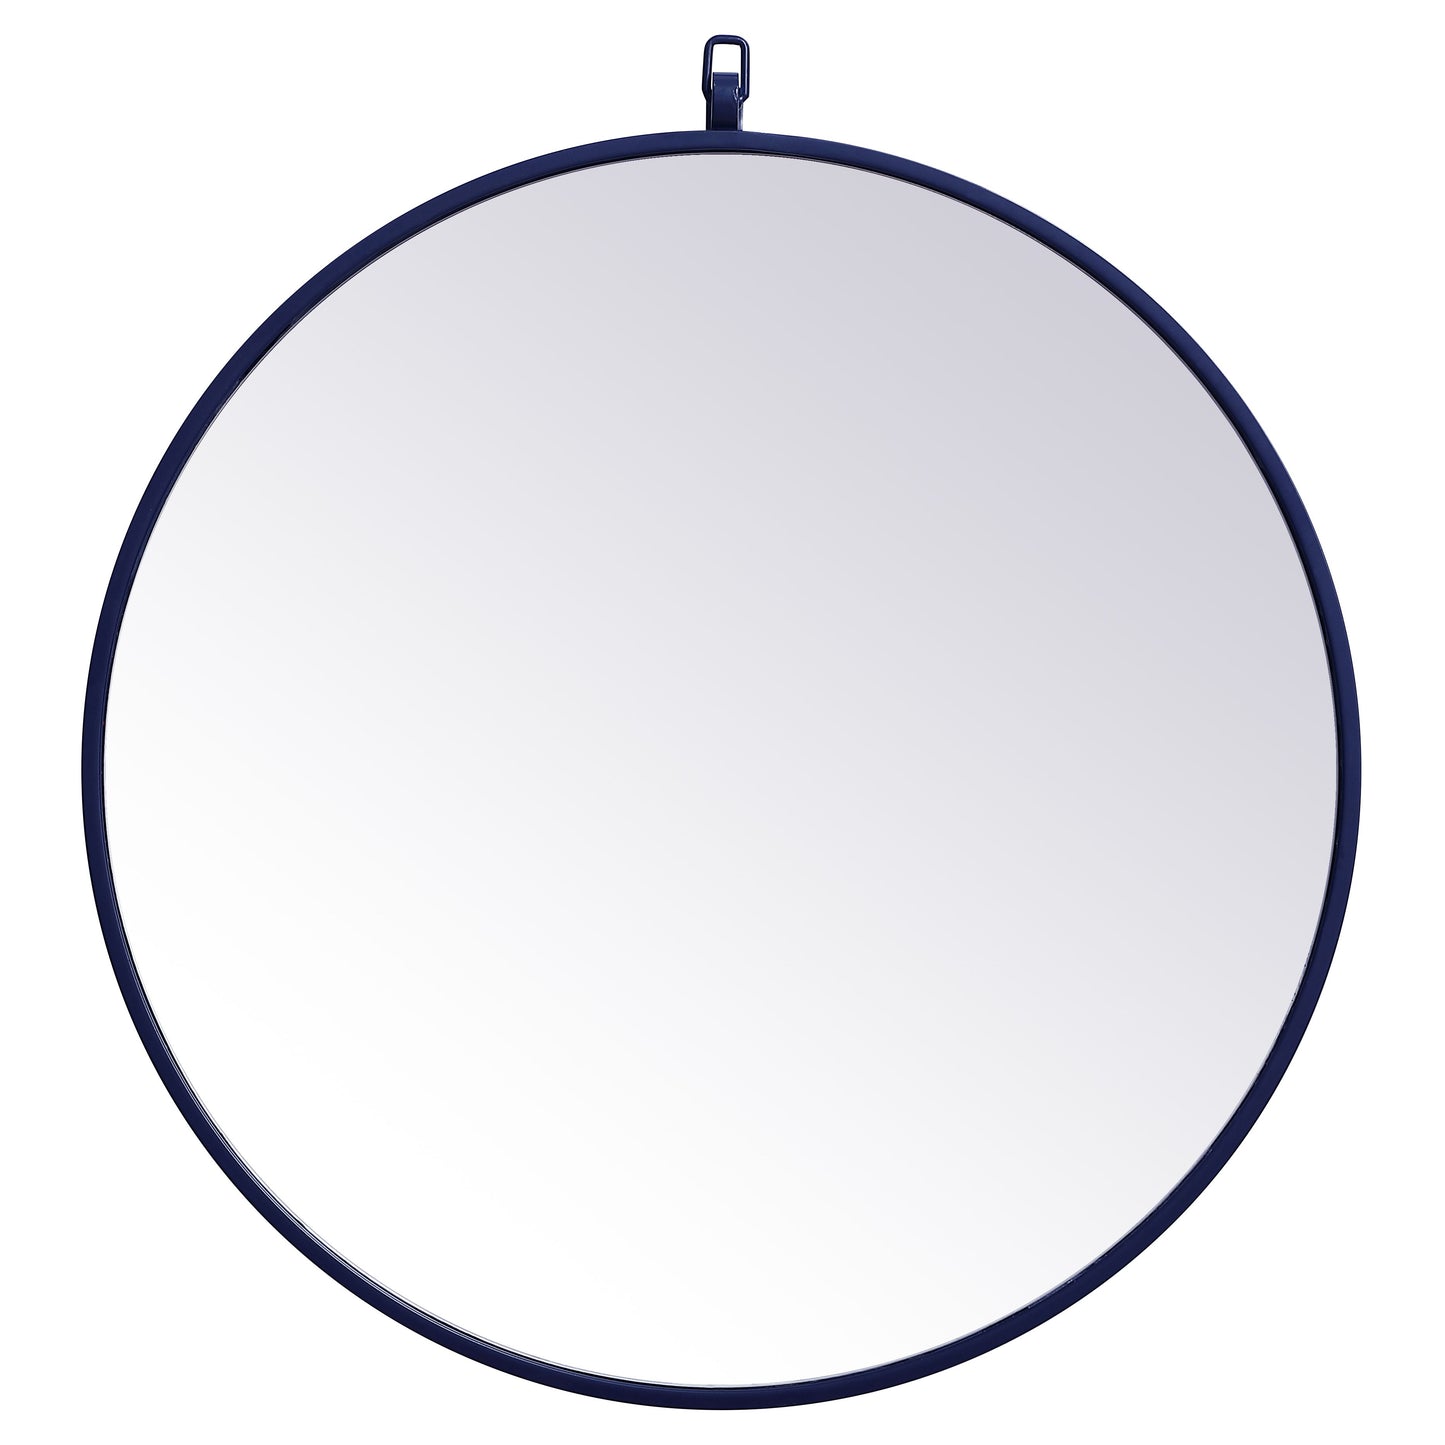 MR4051BL Rowan 24" x 24" Metal Framed Round Mirror with Decorative Hook in Blue